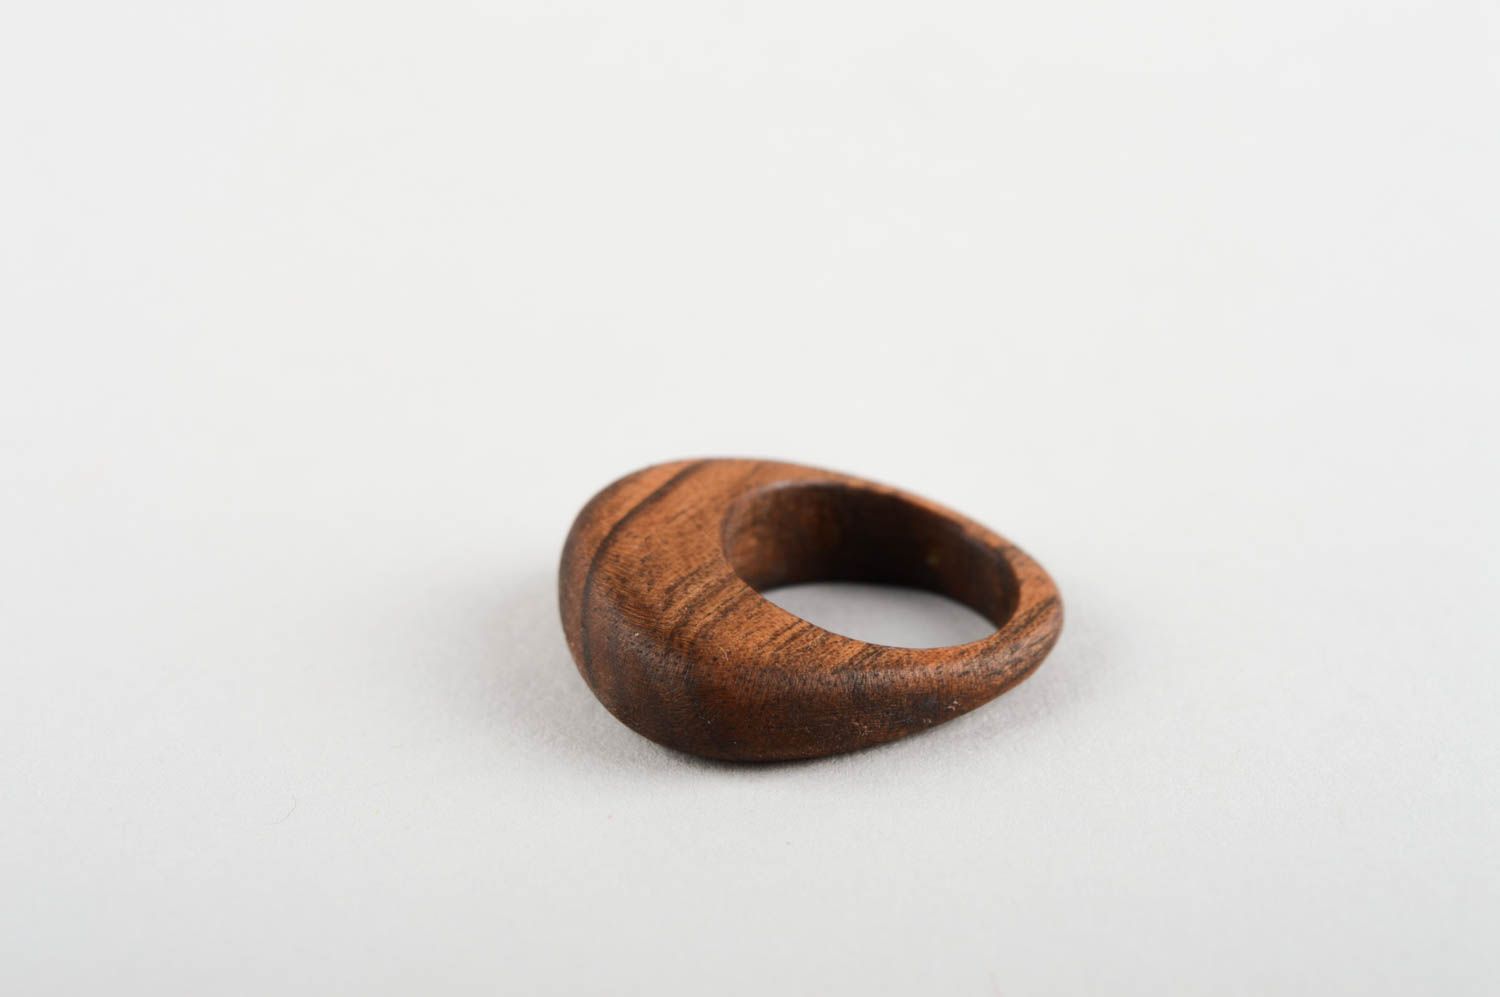 Stylish handmade wooden ring wooden jewelry costume jewelry designs gift ideas photo 4